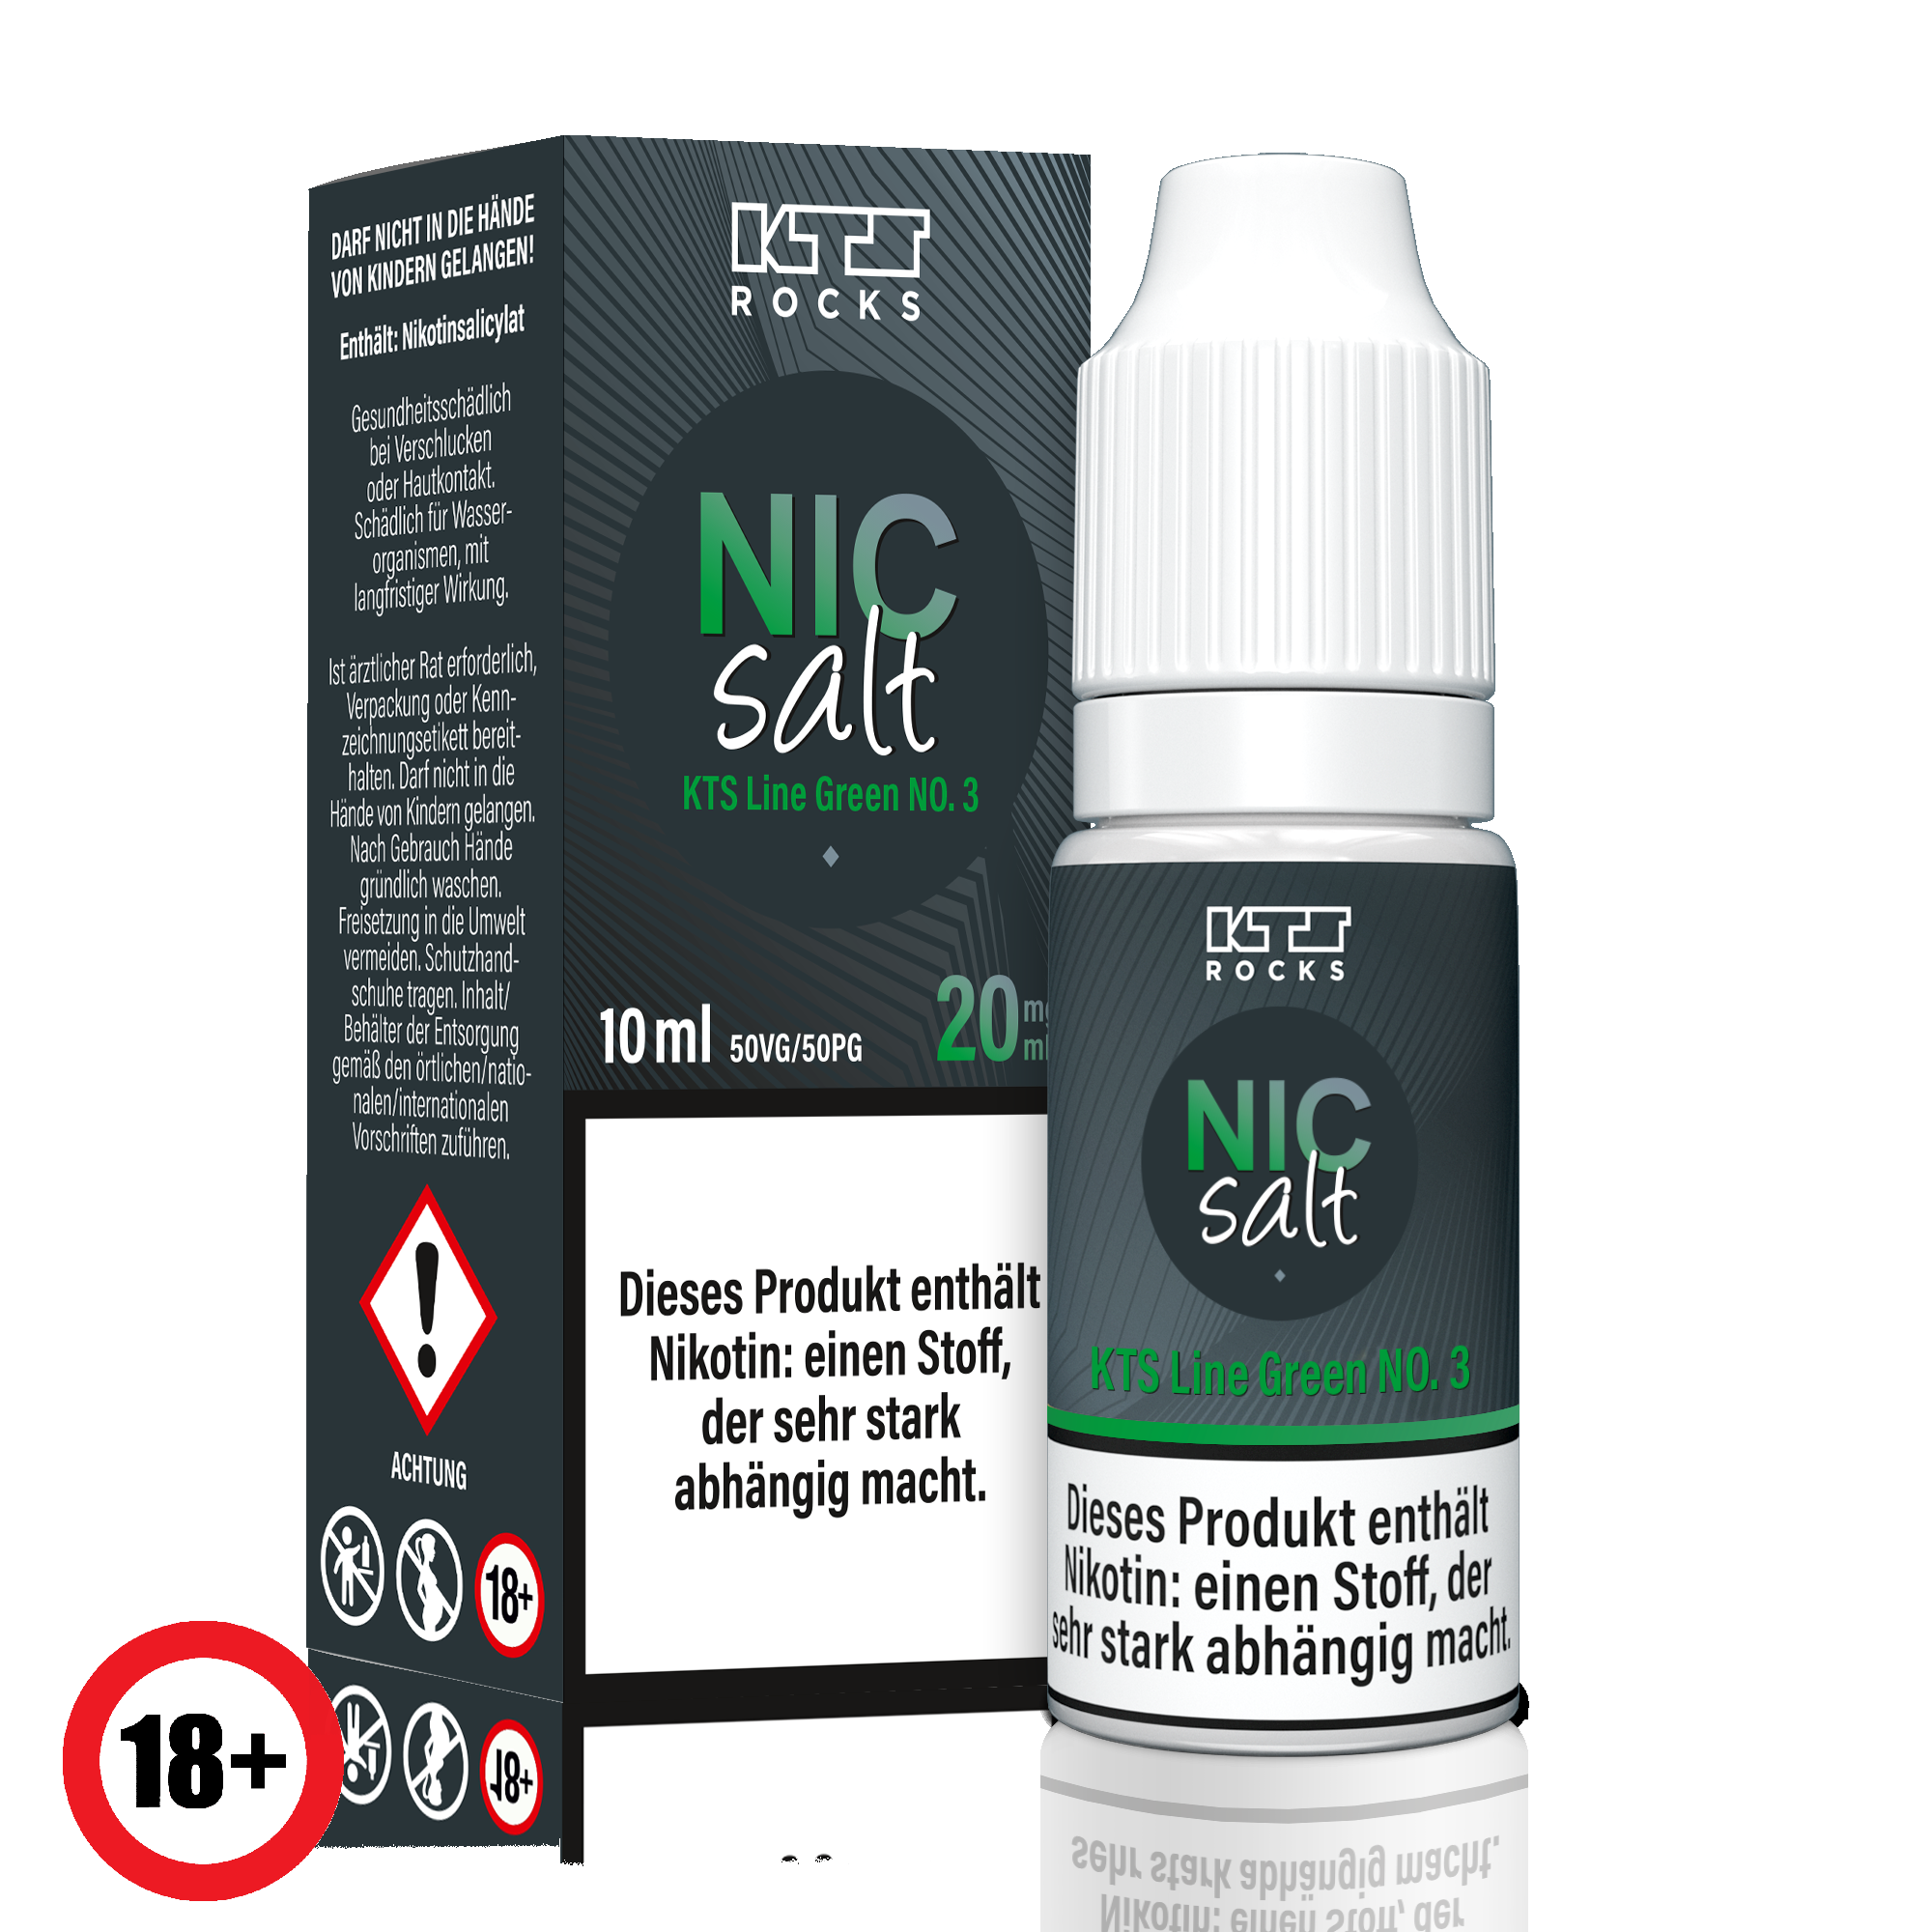 KTS Line Green No. 3 Nikotinsalz Liquid ✅ Jetzt günstig kaufen! 